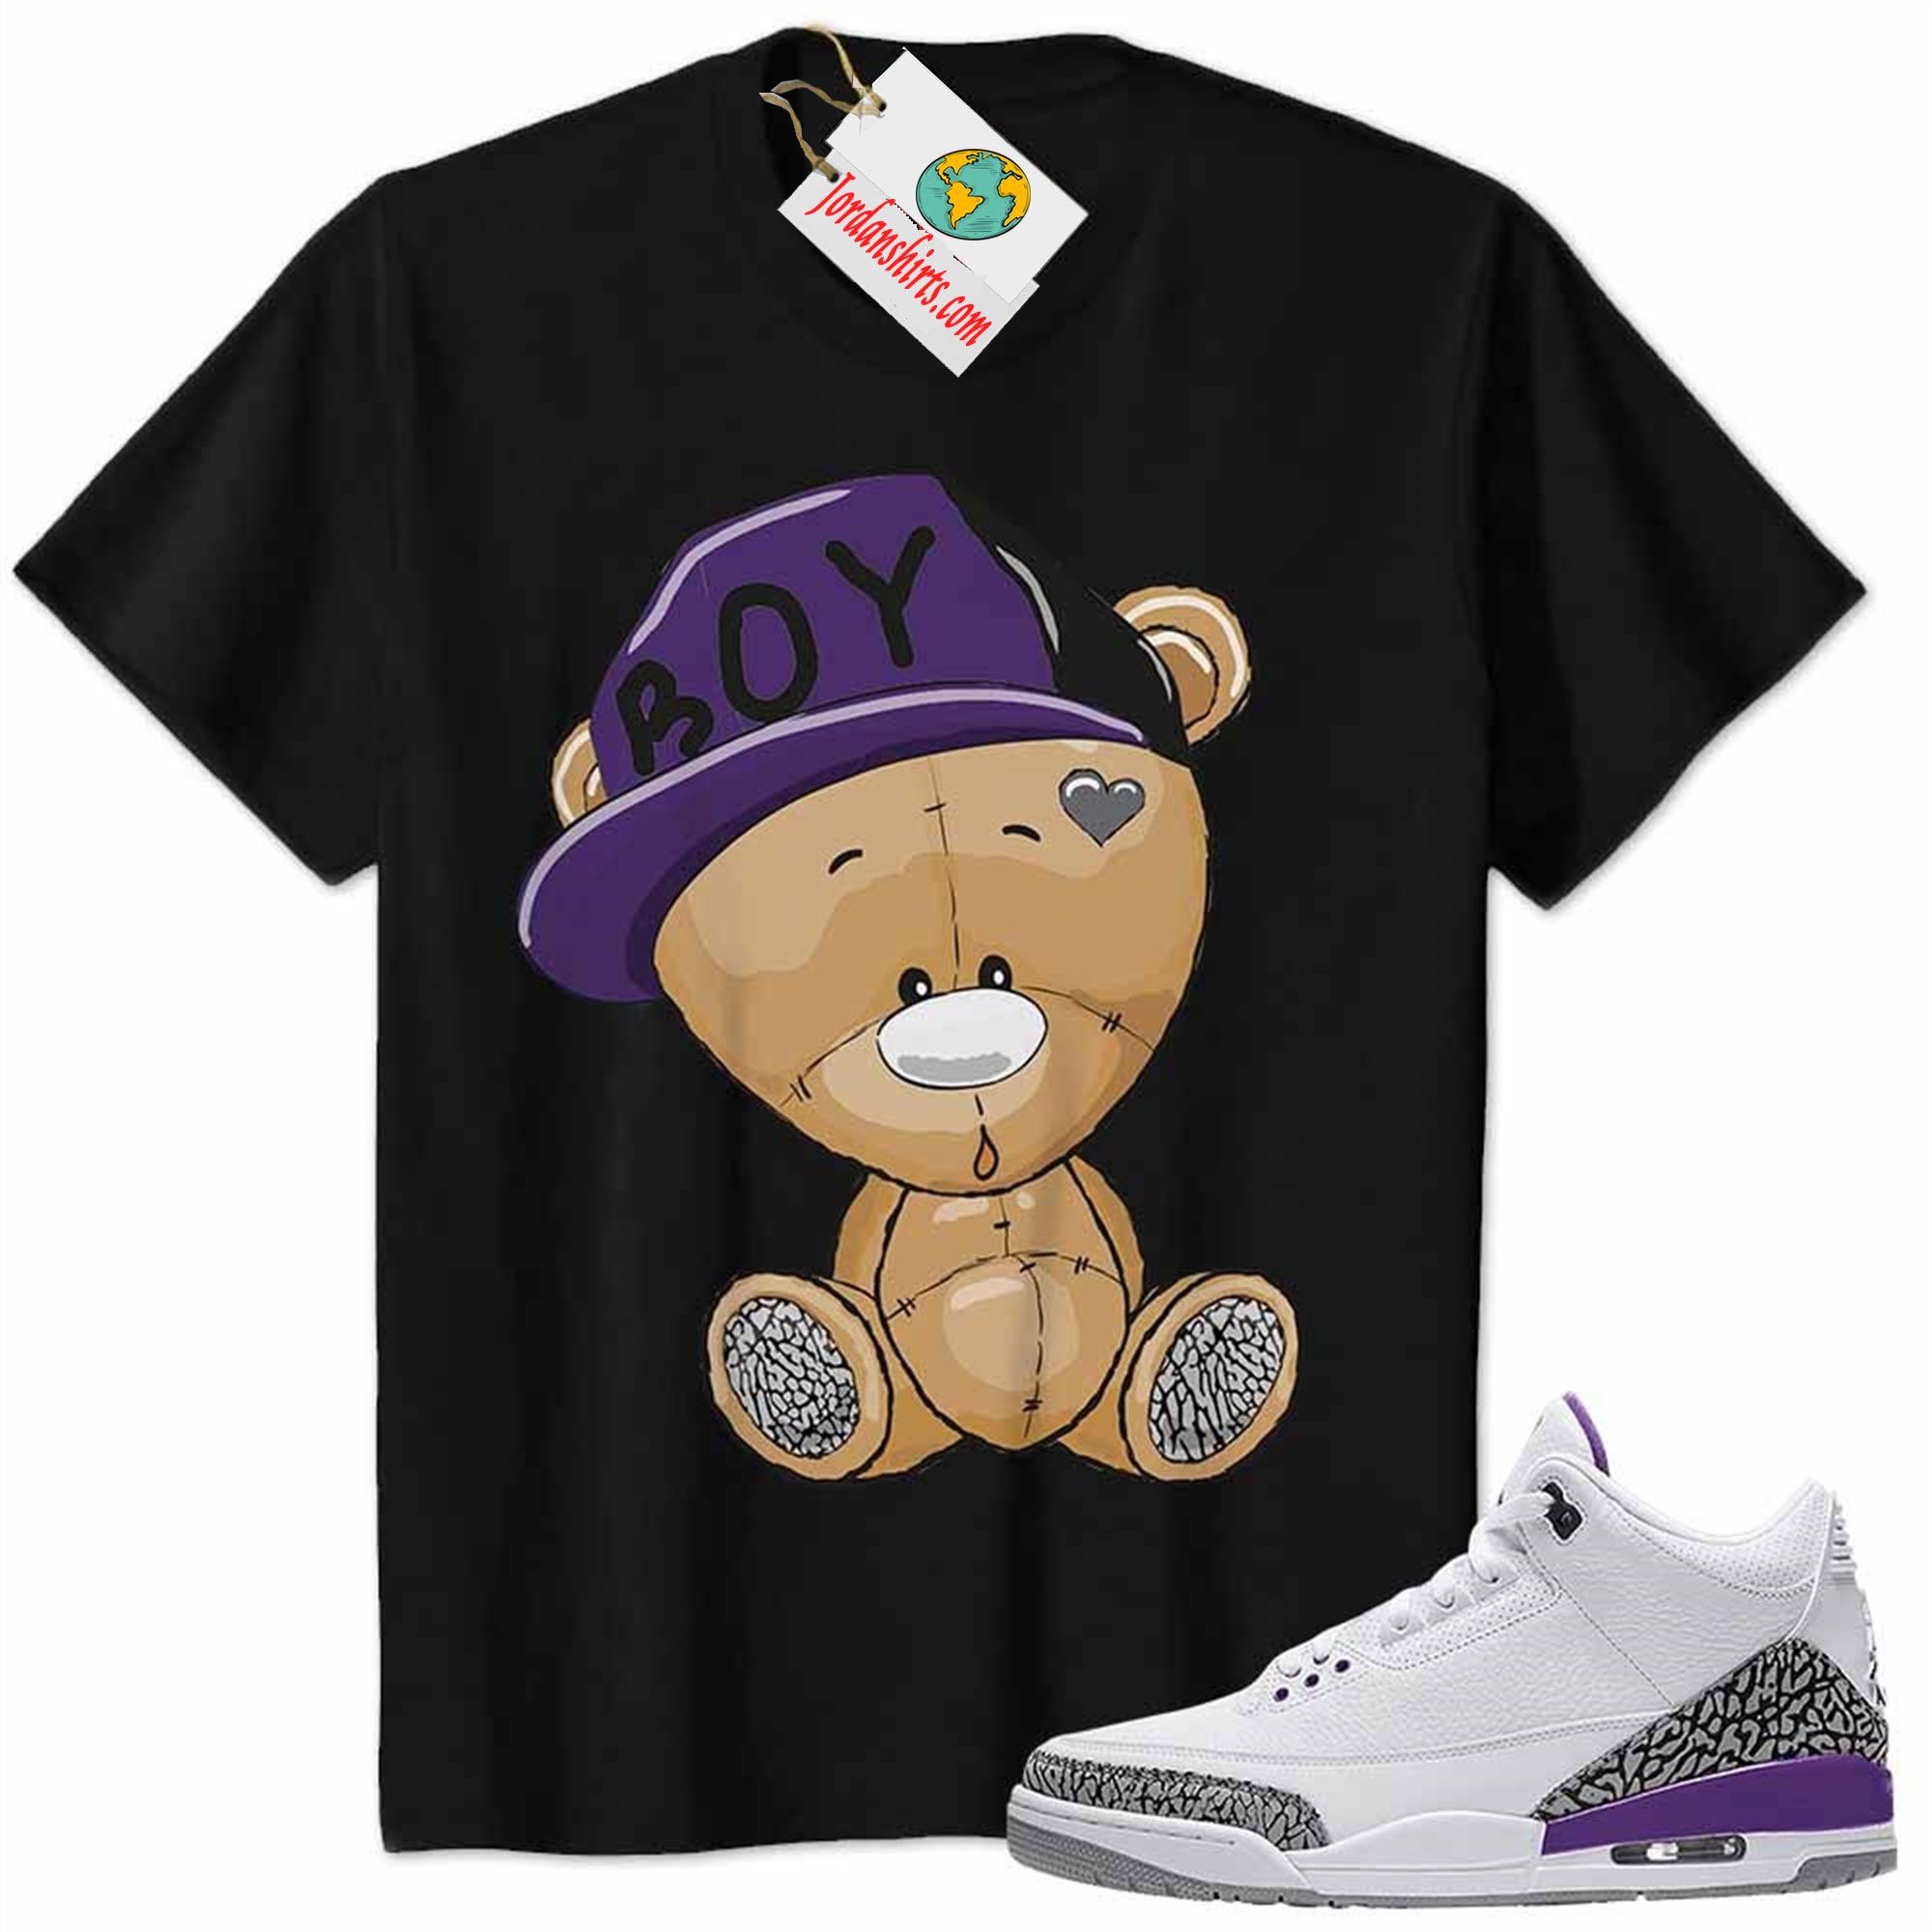 Jordan 3 Shirt, Jordan 3 Wmns Dark Iris Violet Ore Shirt Cute Baby Teddy Bear Black Plus Size Up To 5xl